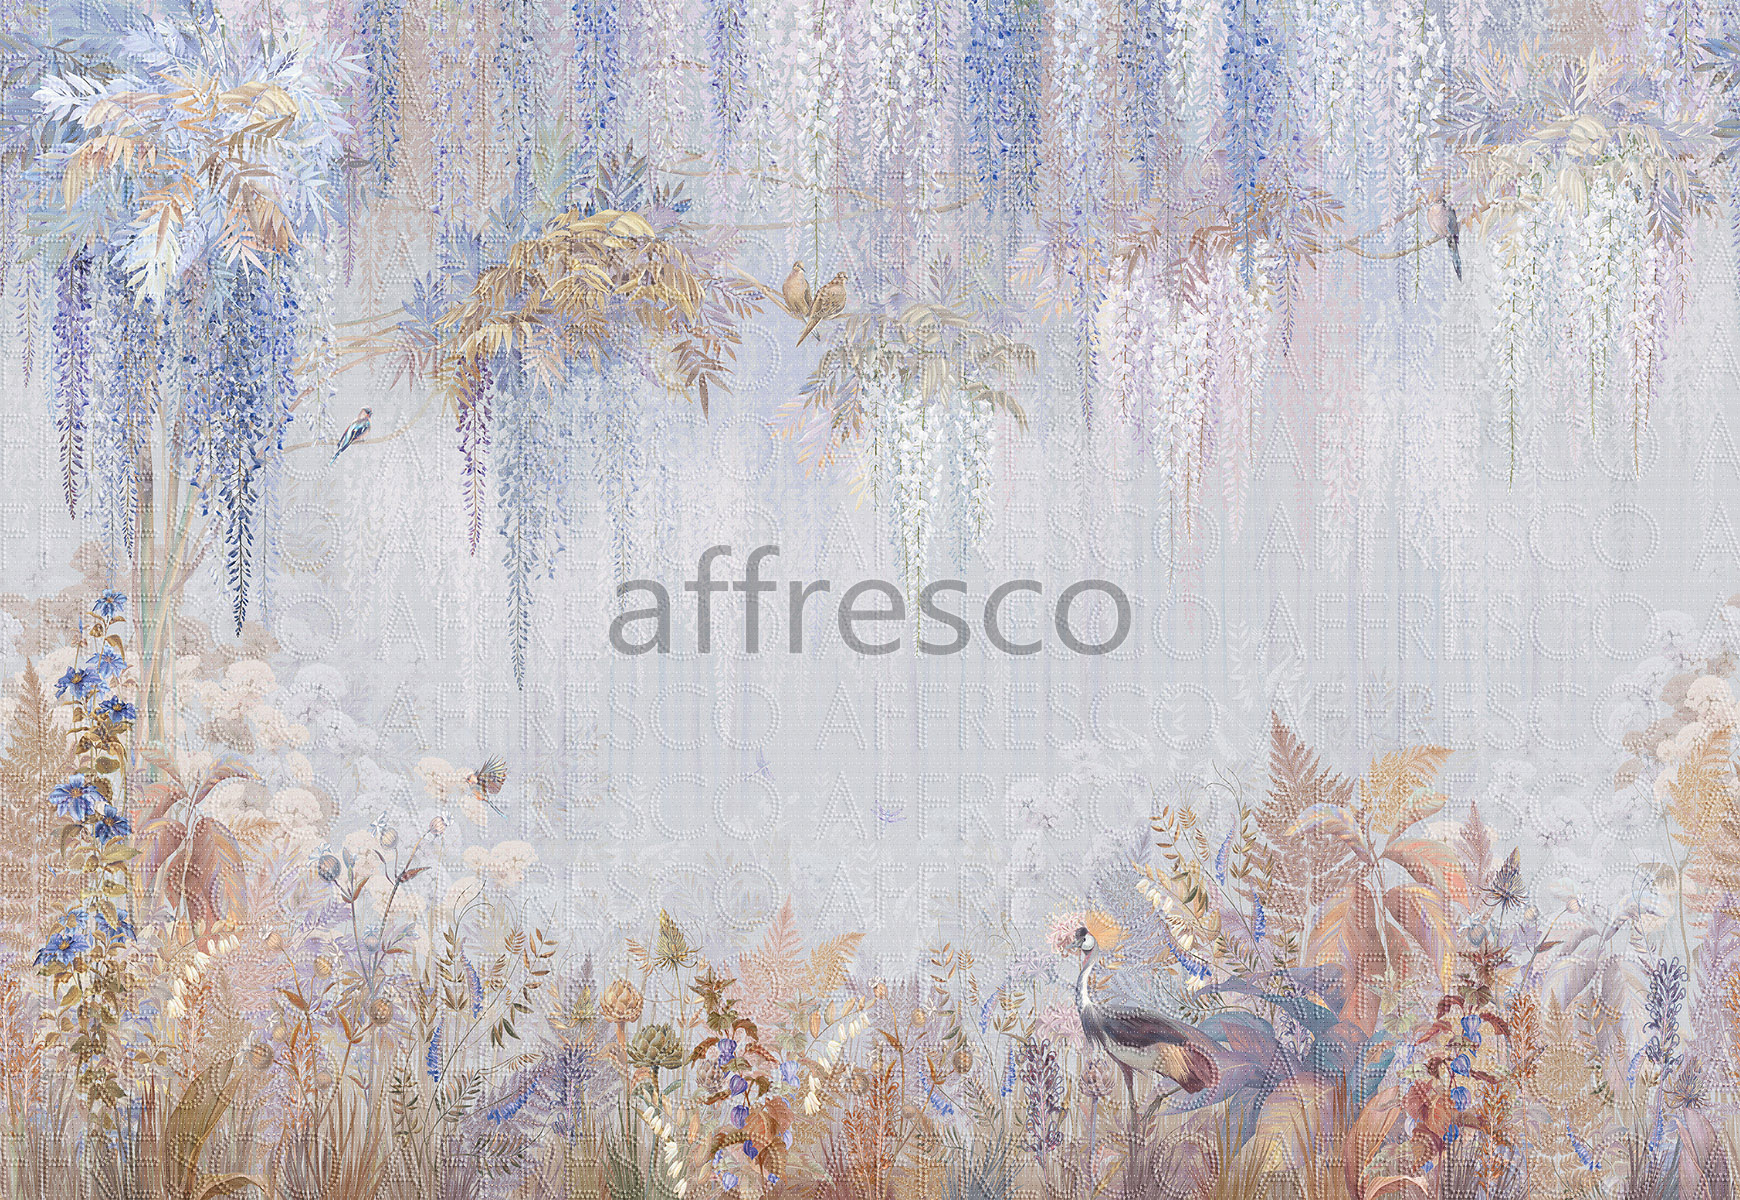 ID136006 | Forest |  | Affresco Factory